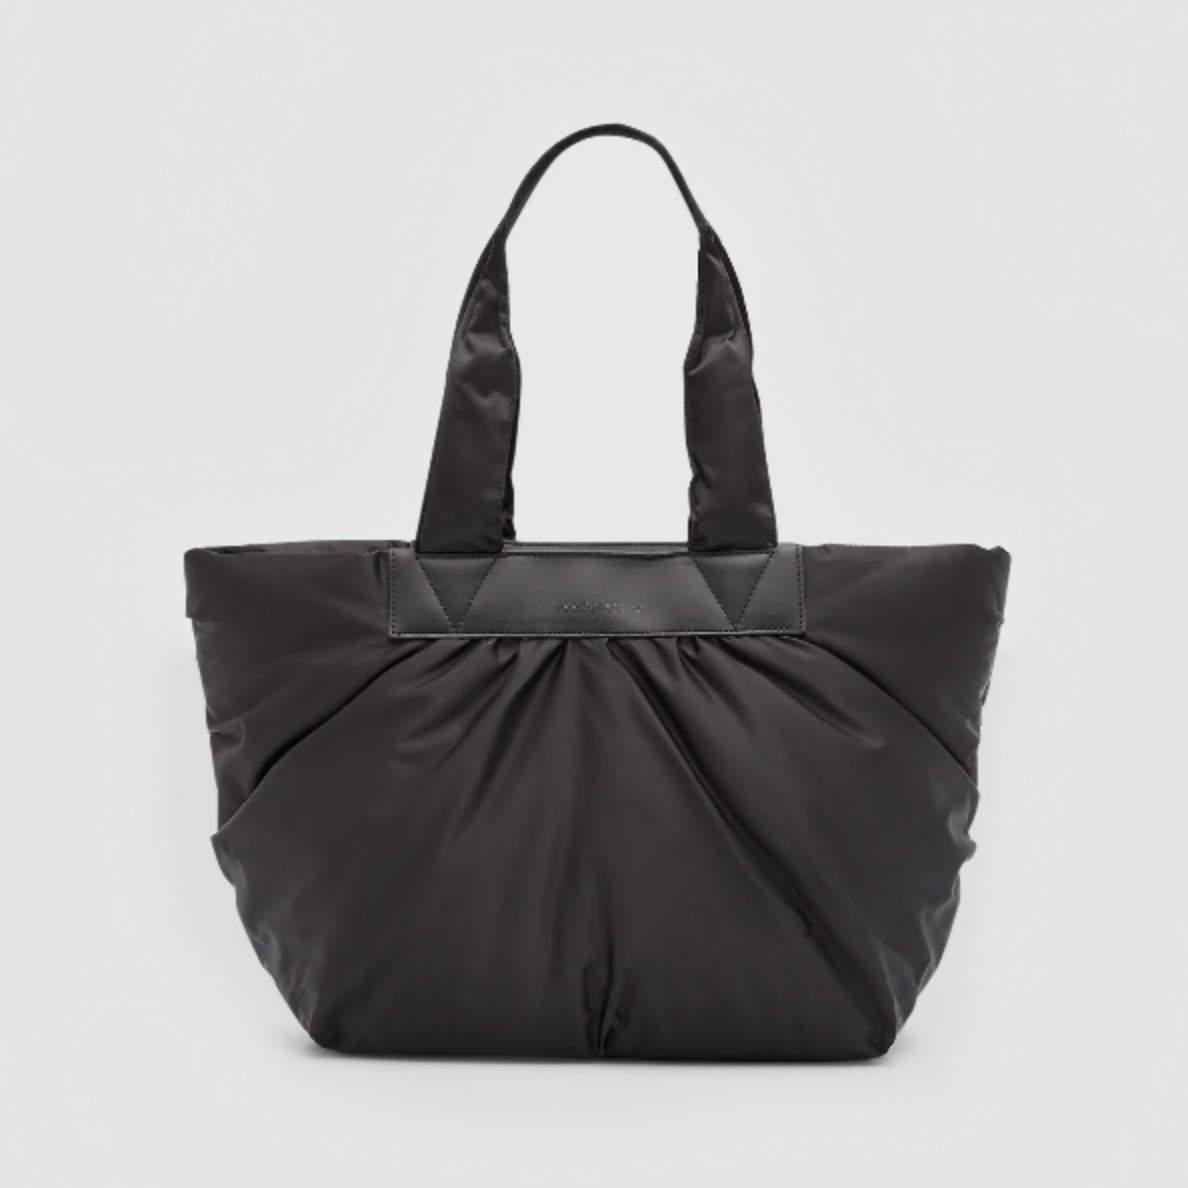 Buy Nylon Shoulder Bag Online In India - Etsy India